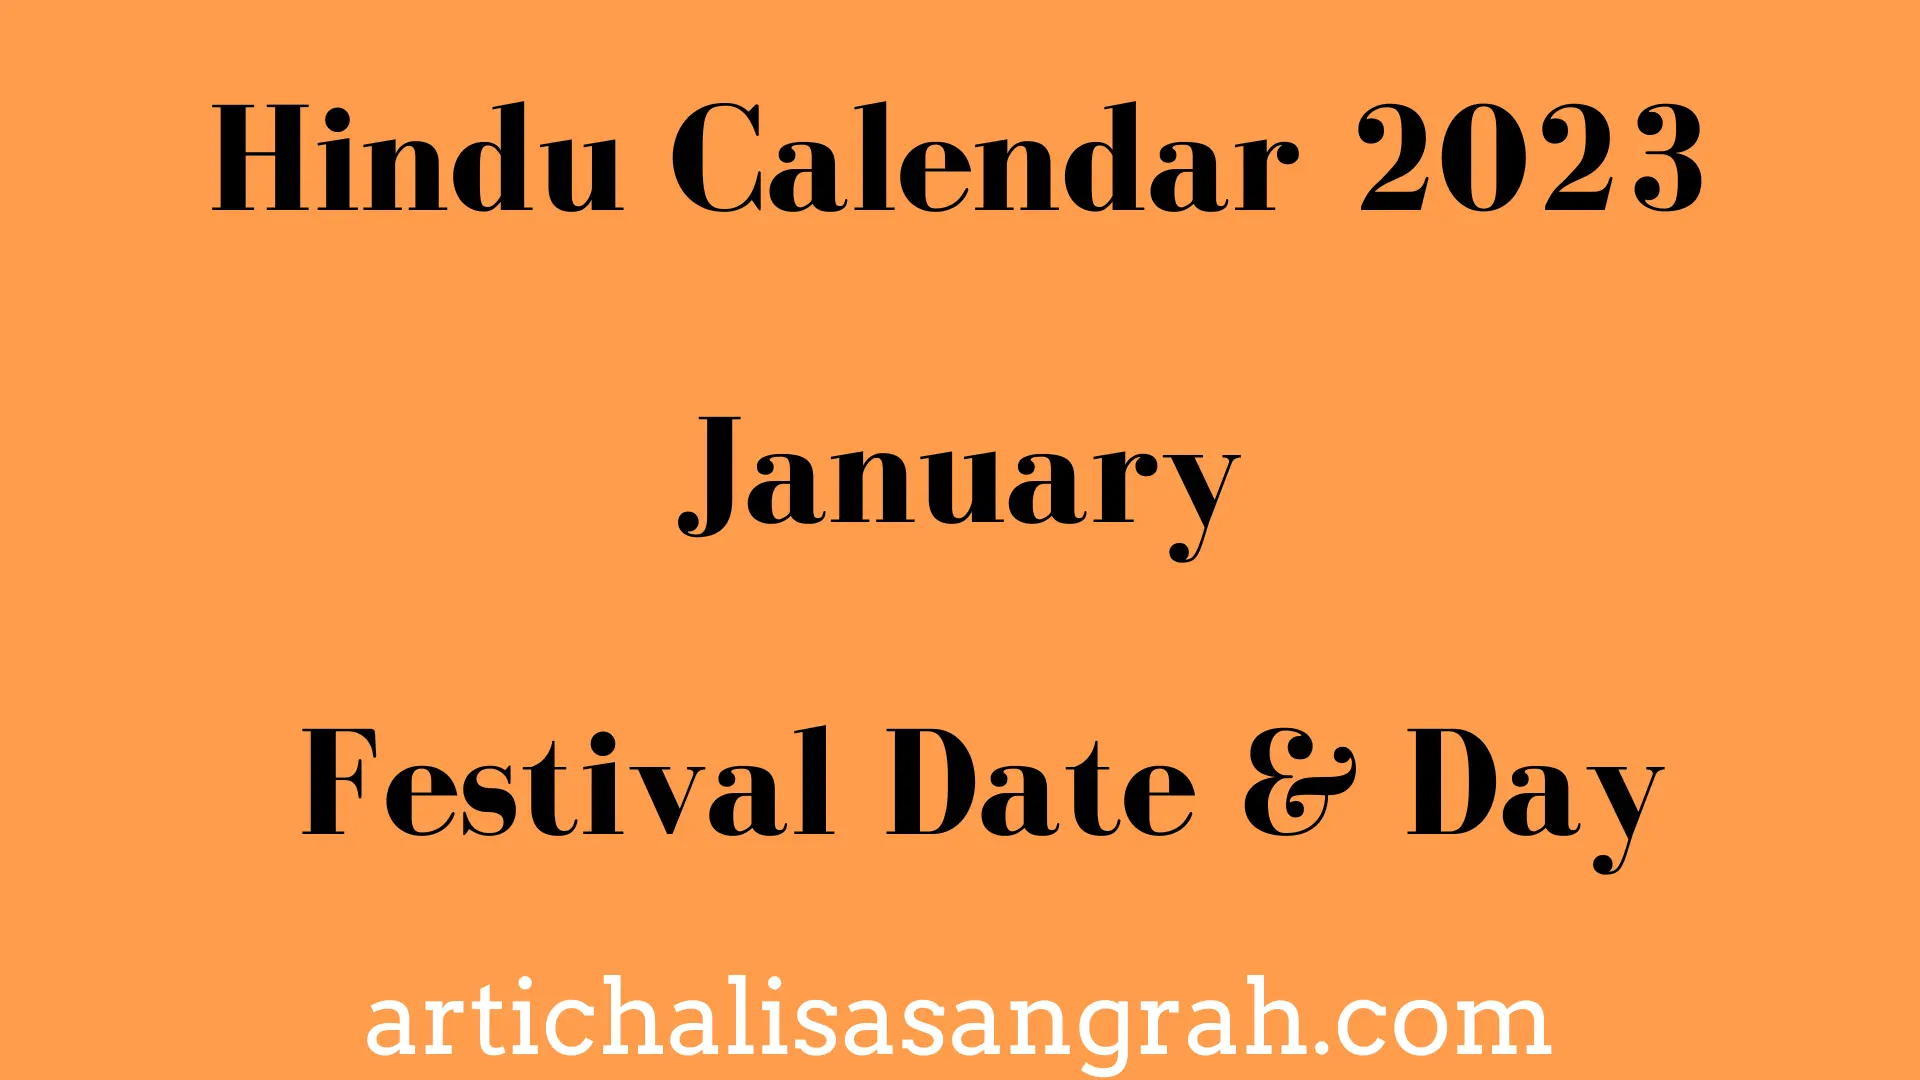 hindu-calendar-january-2023-arti-chalisa-sangrah